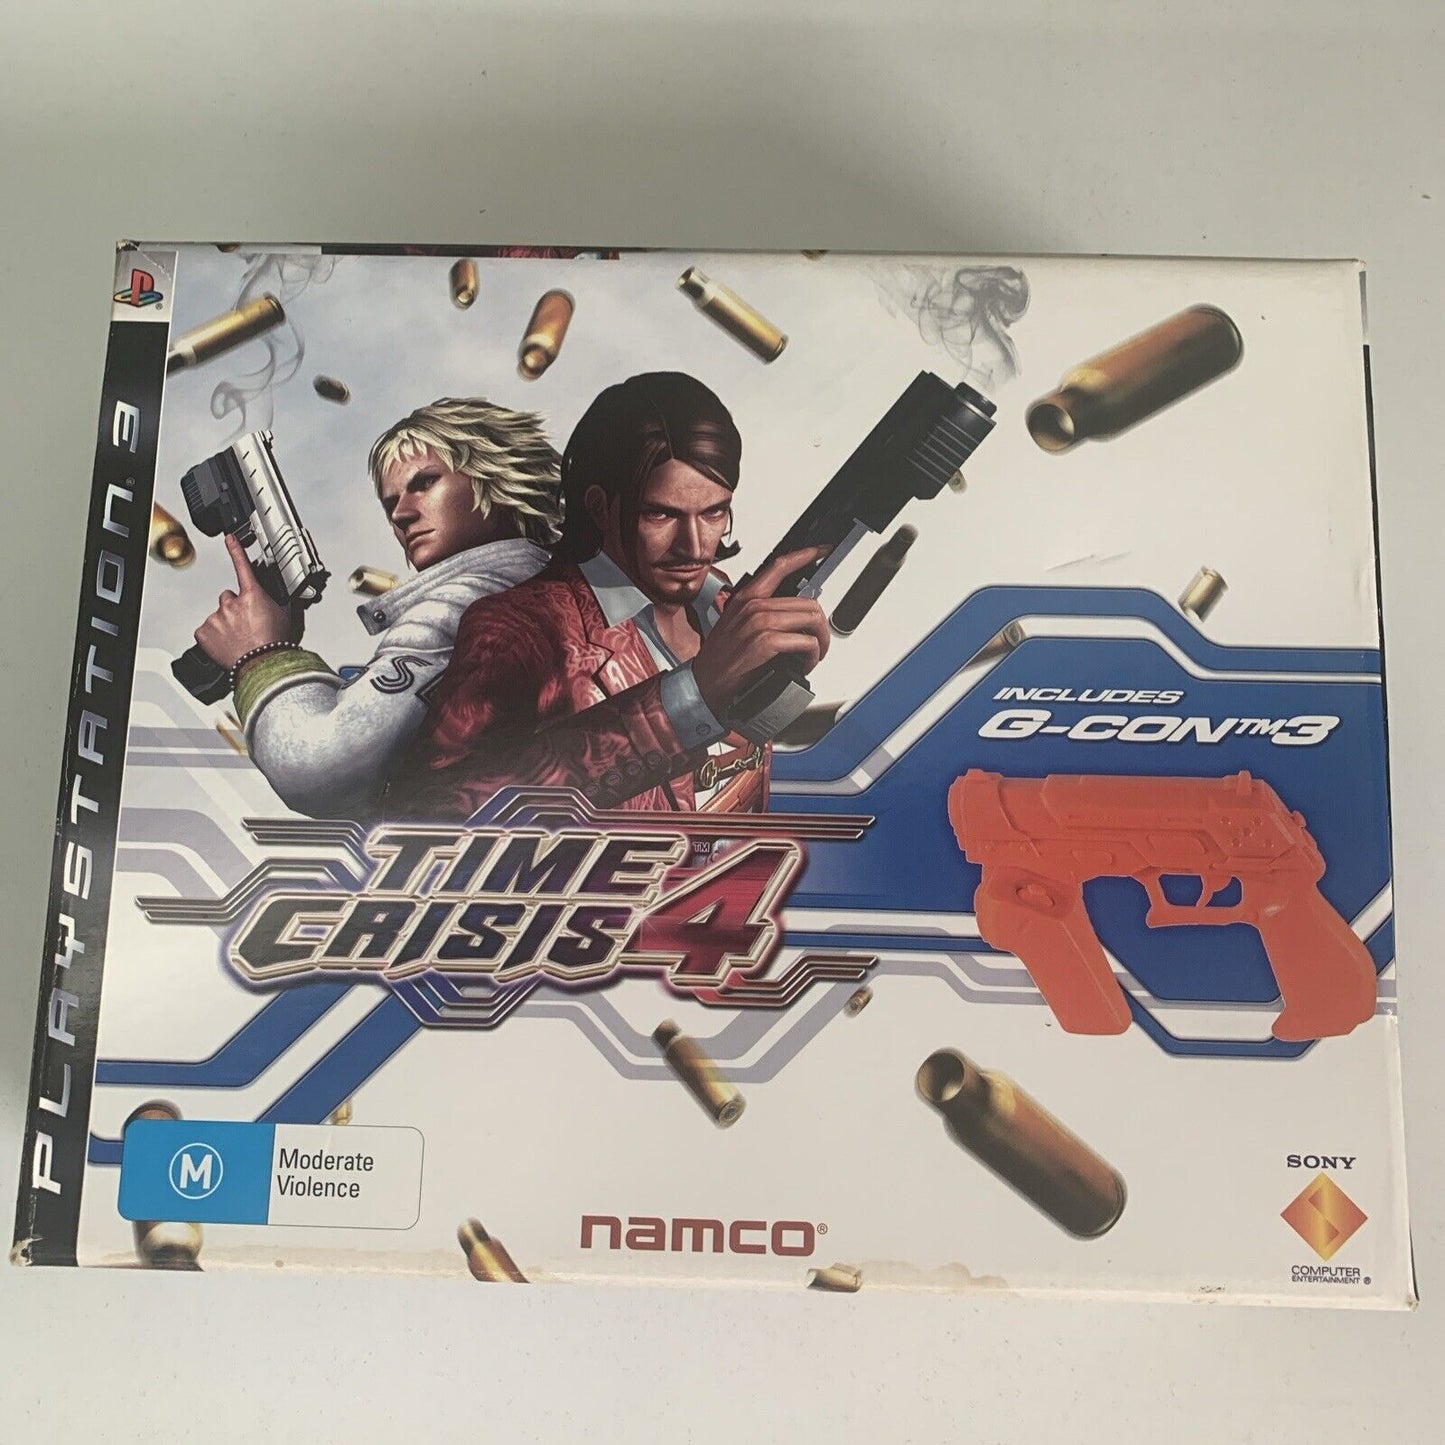 Time Crisis 4 Game & Gun Bundle PlayStation 3 PS3 CIB